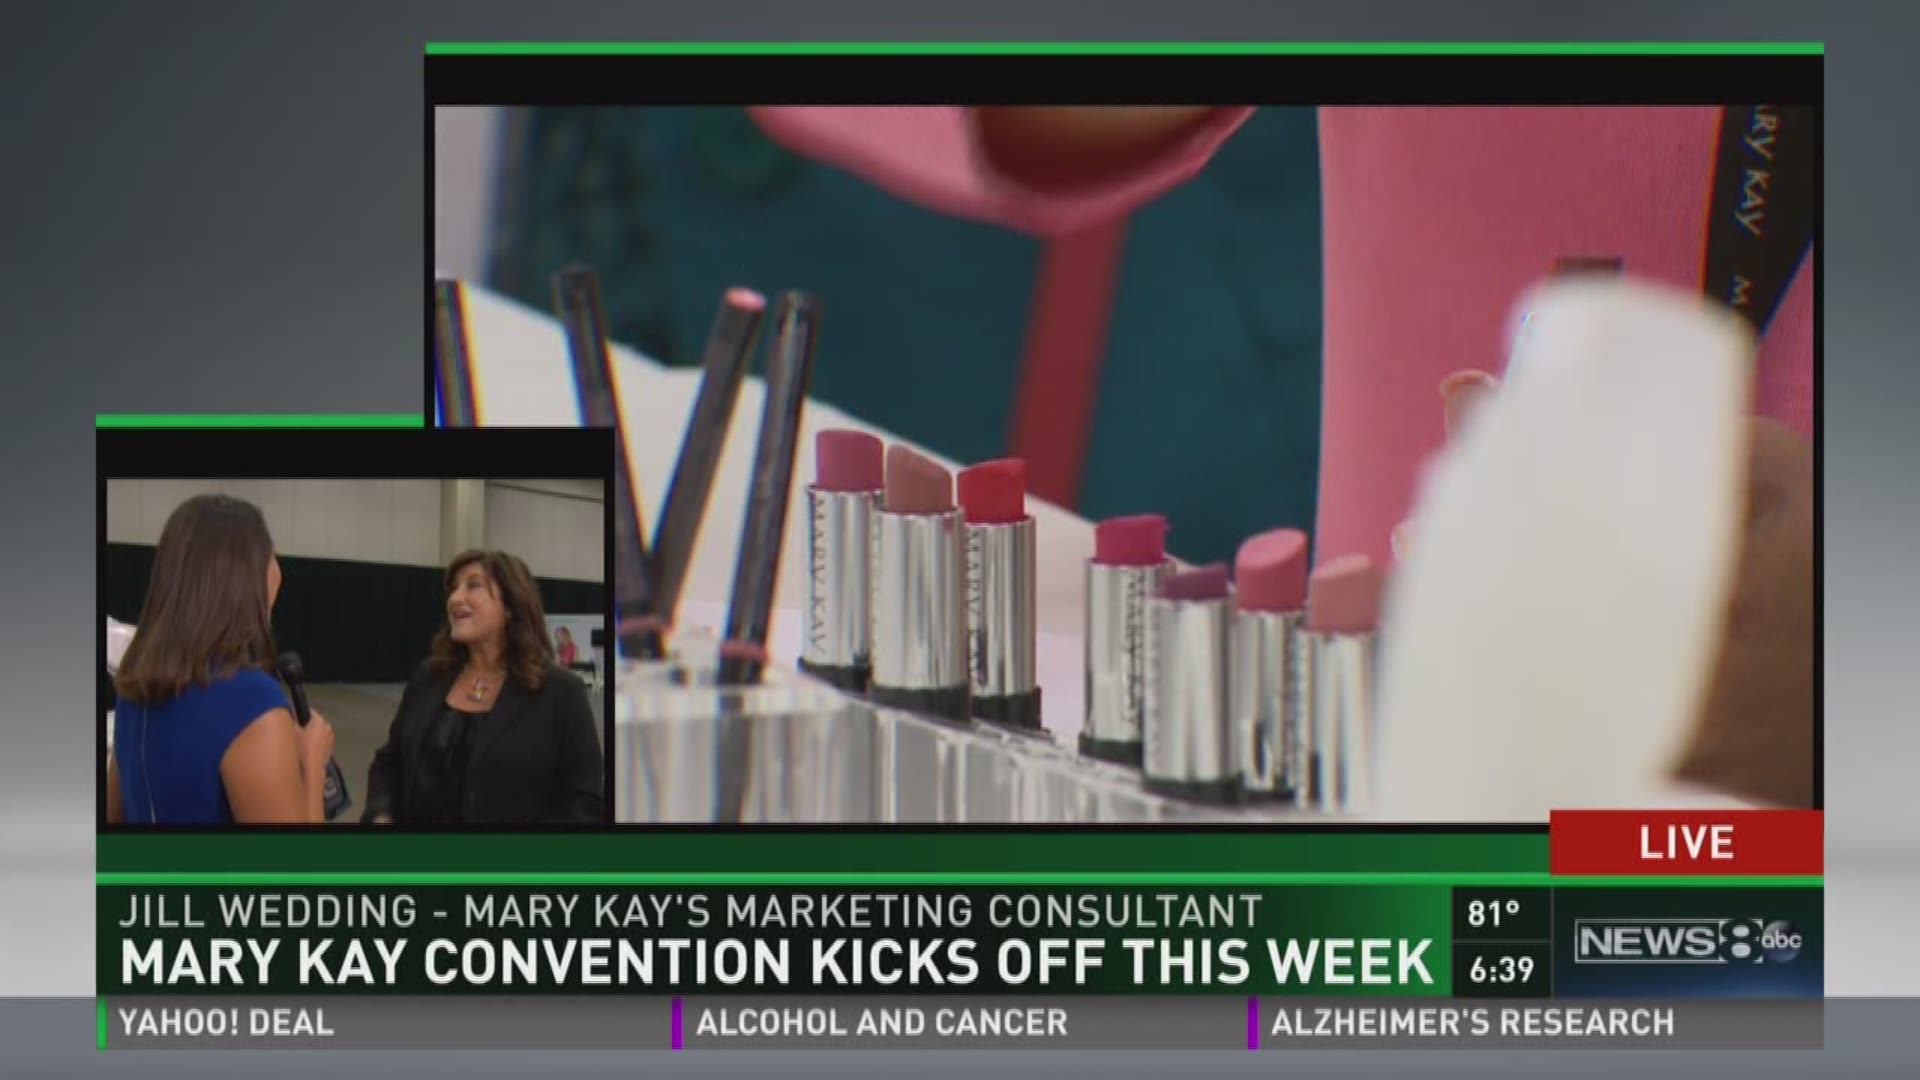 Mary Kay convention kicks off this week